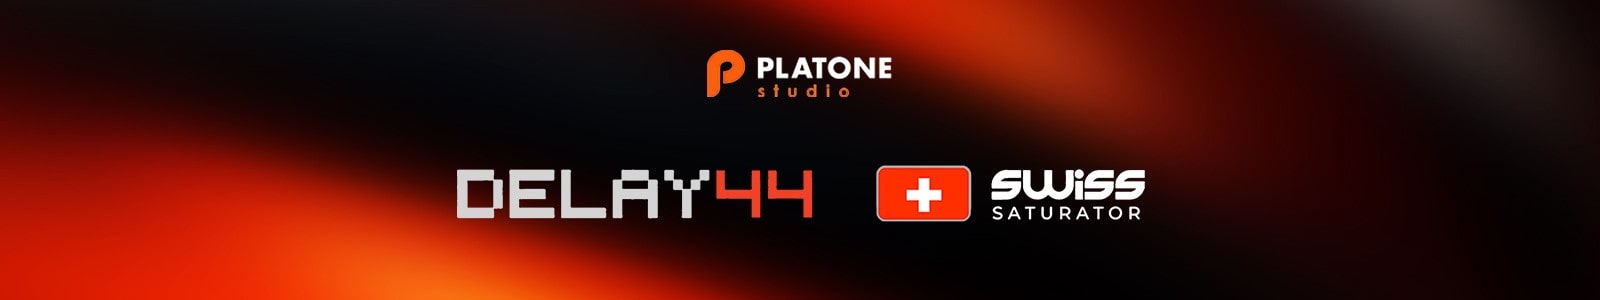 Platone Studio Delay 44 + Swiss Saturator bundle